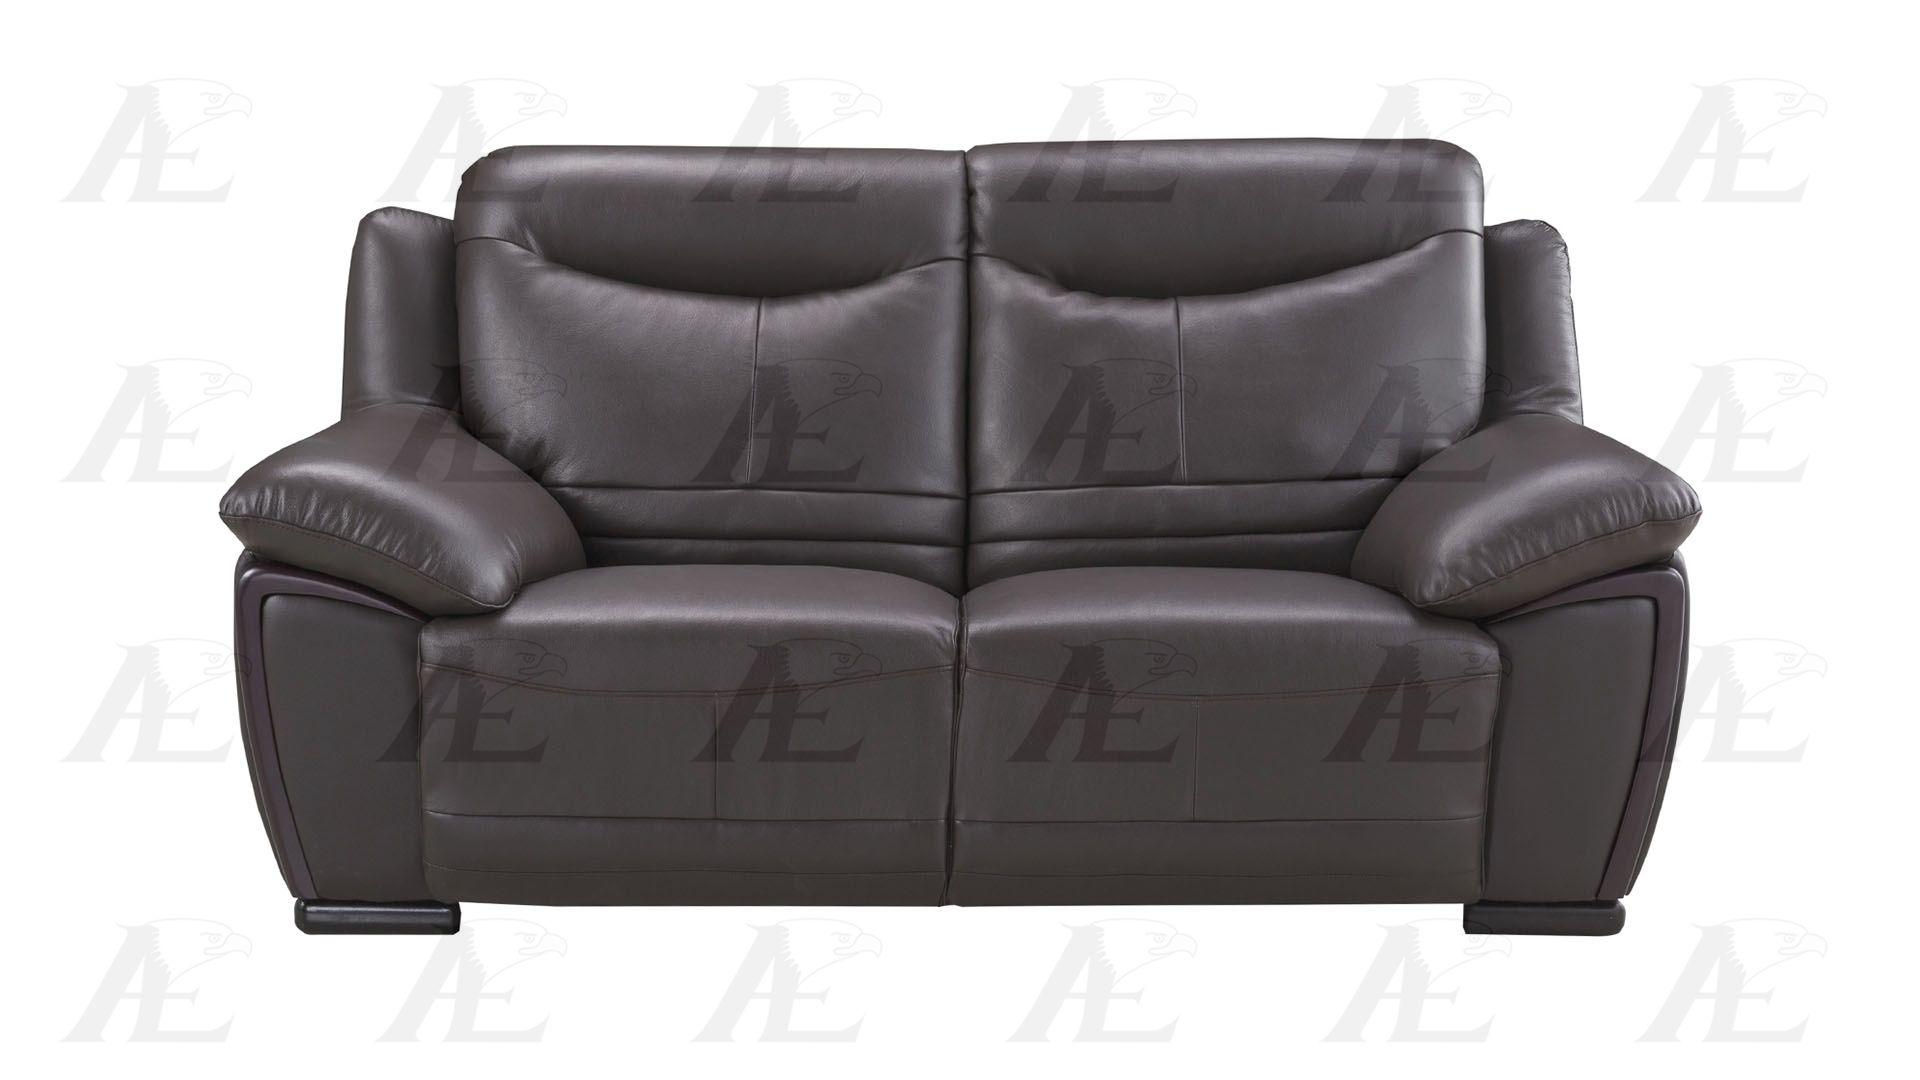 

                    
American Eagle Furniture EK-B308-DC Sofa and Loveseat Set Dark Chocolate Genuine Leather Purchase 
